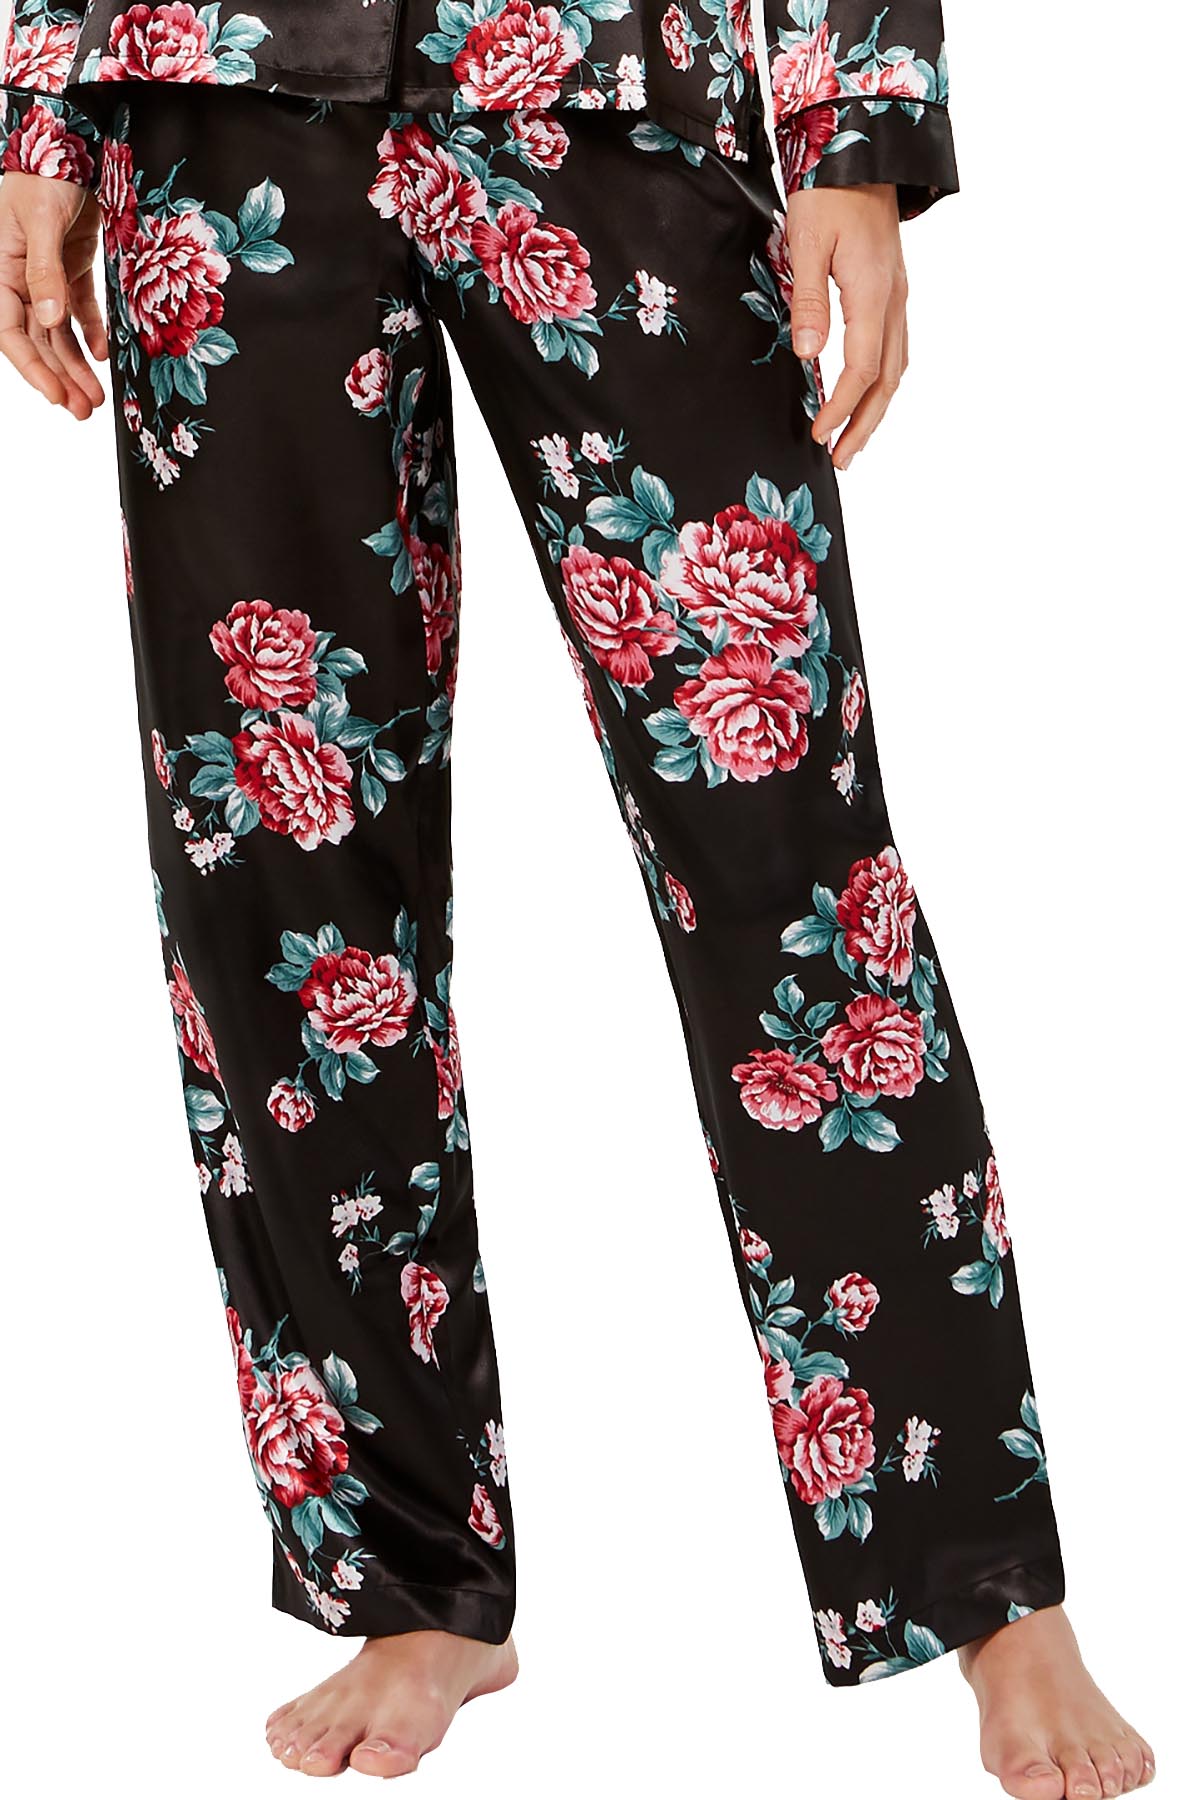 Thalia Sodi Intimates Black/Floral Printed Pajama Pant